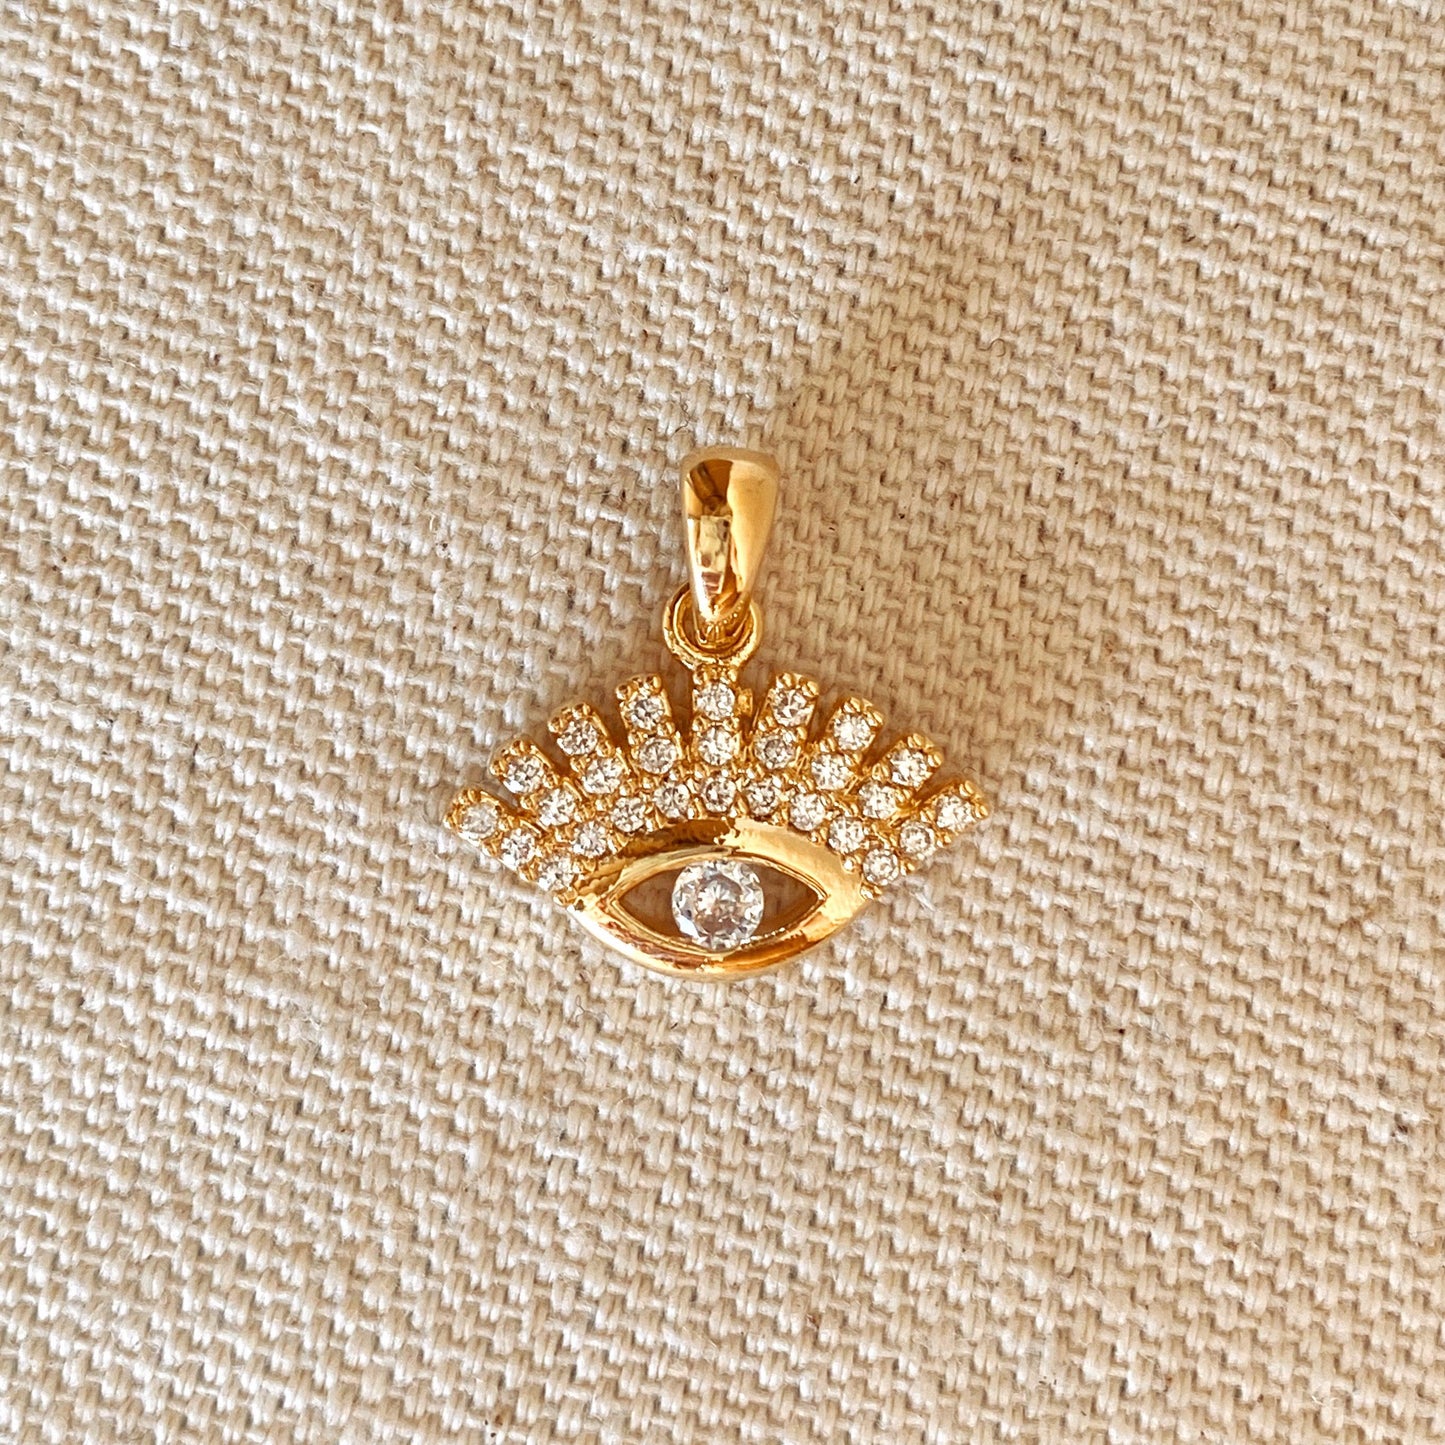 GoldFi Dainty Cubic Zirconia Evil Eye Pendant in 18k Gold Filled